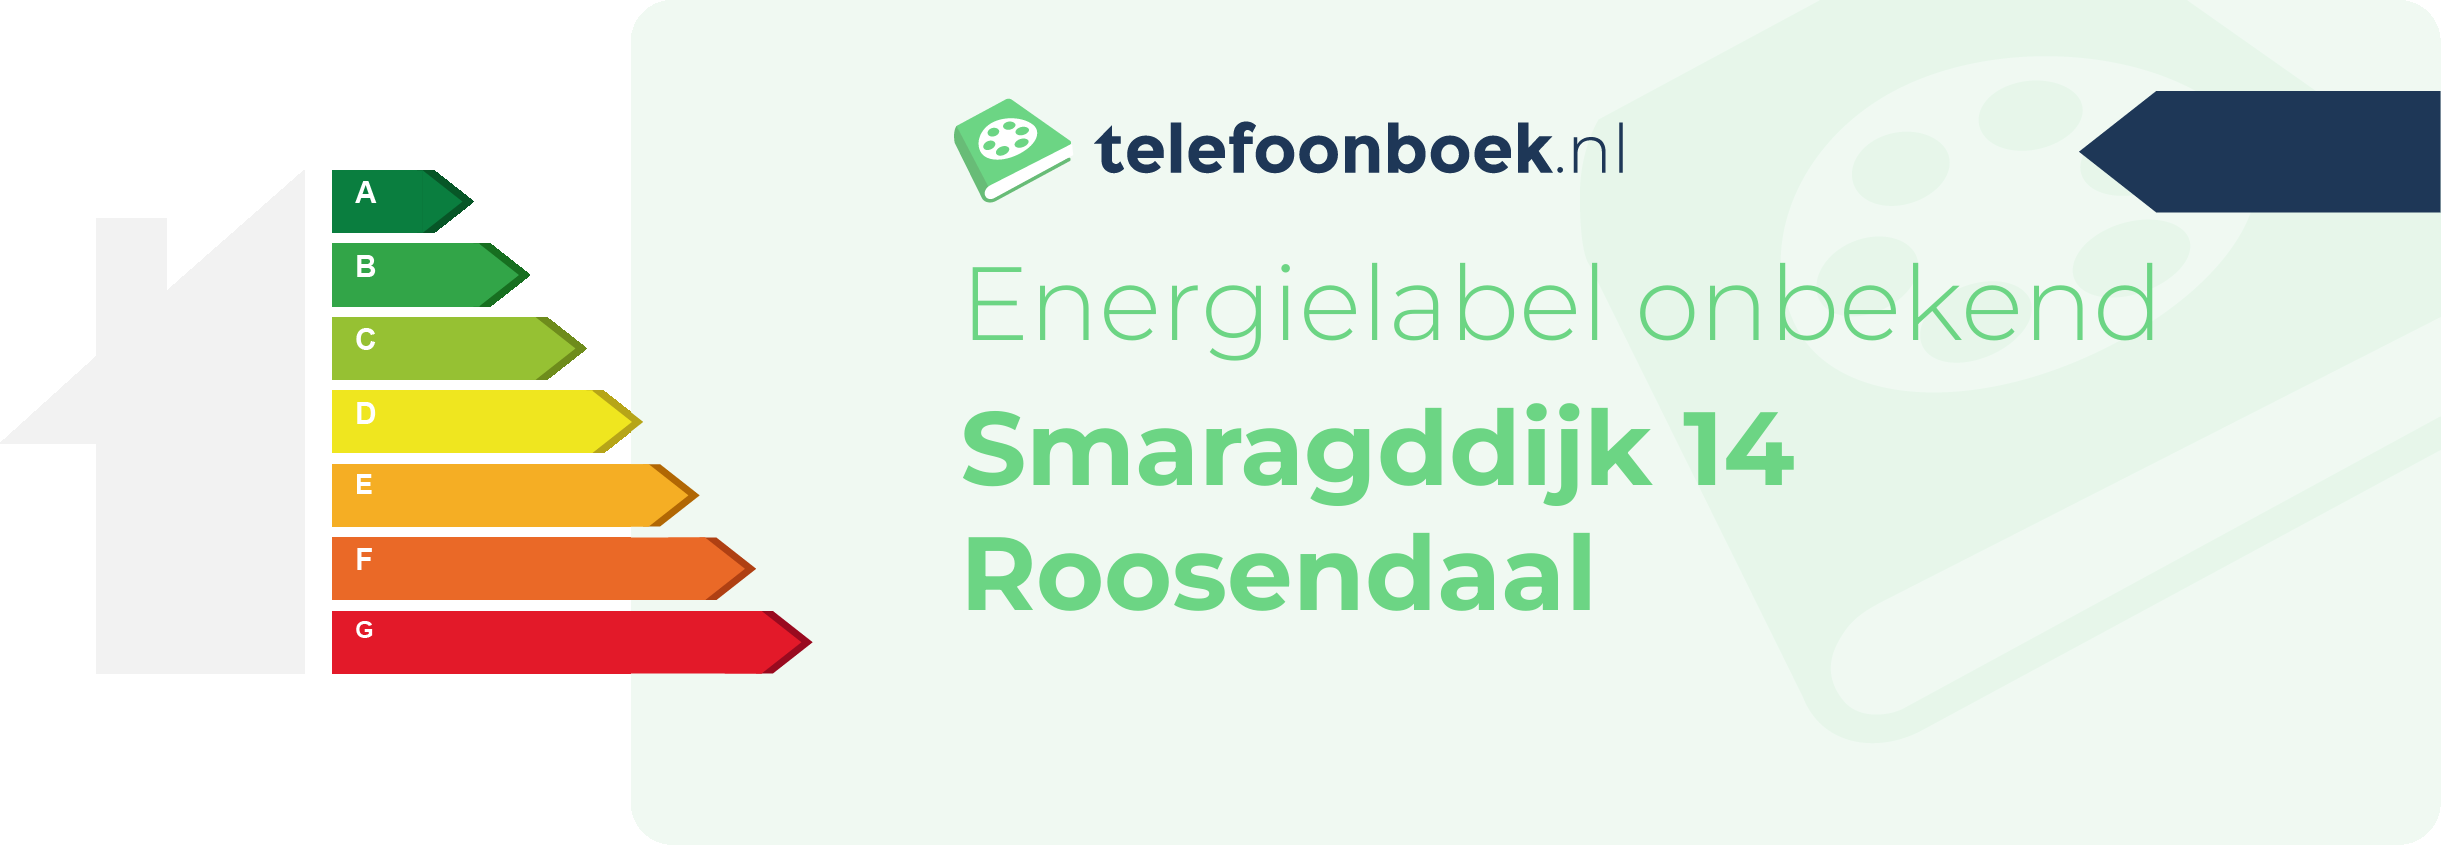 Energielabel Smaragddijk 14 Roosendaal